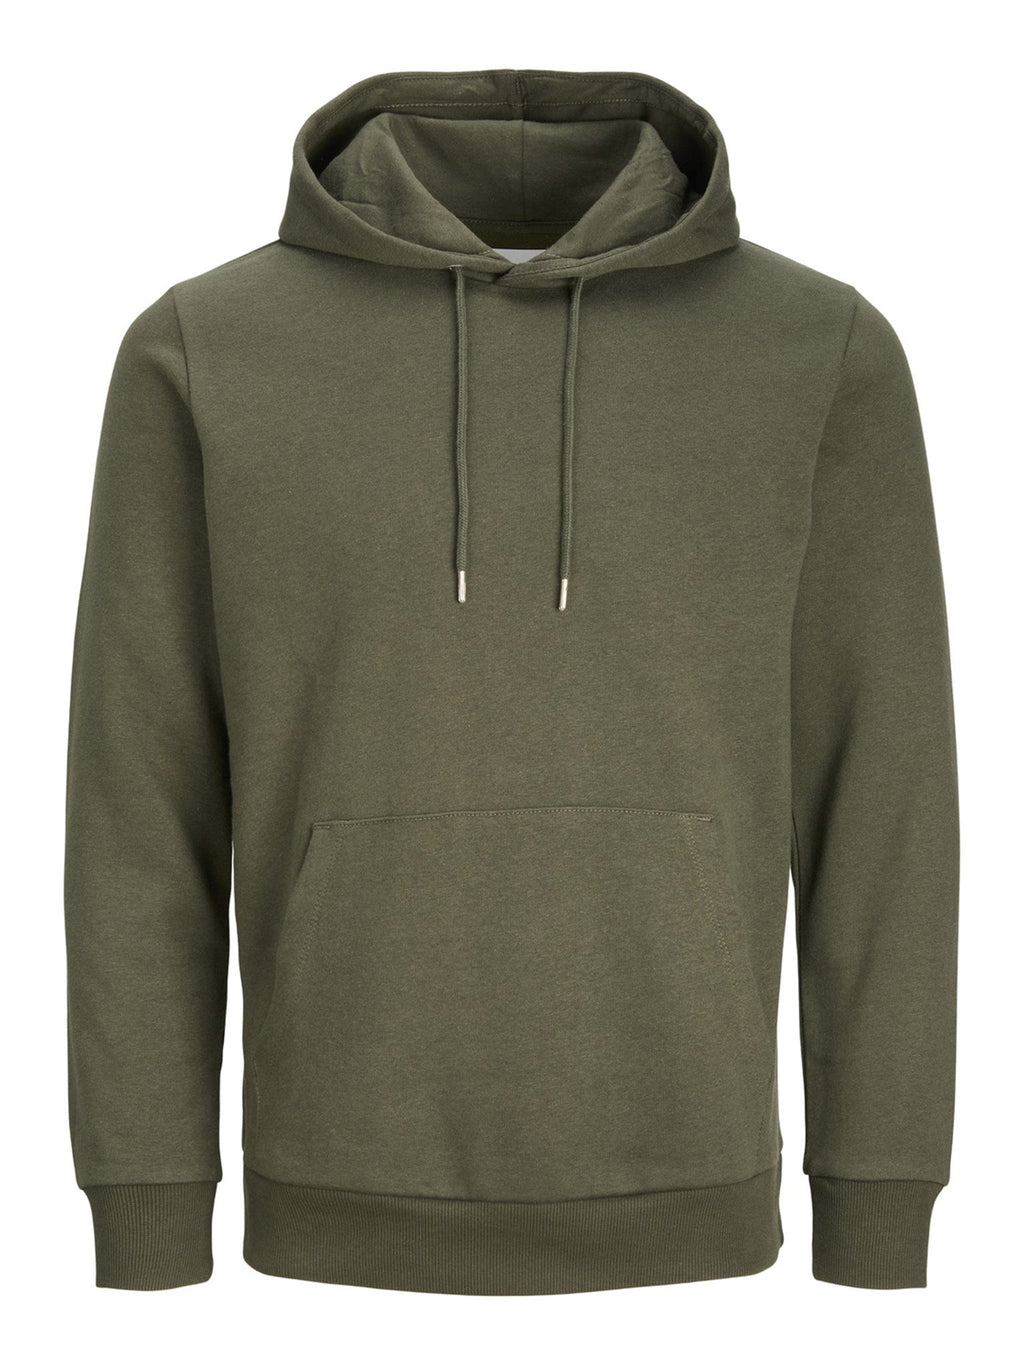 Basic Sweatsuit le hoodie (glas dorcha) - Deal an phacáiste